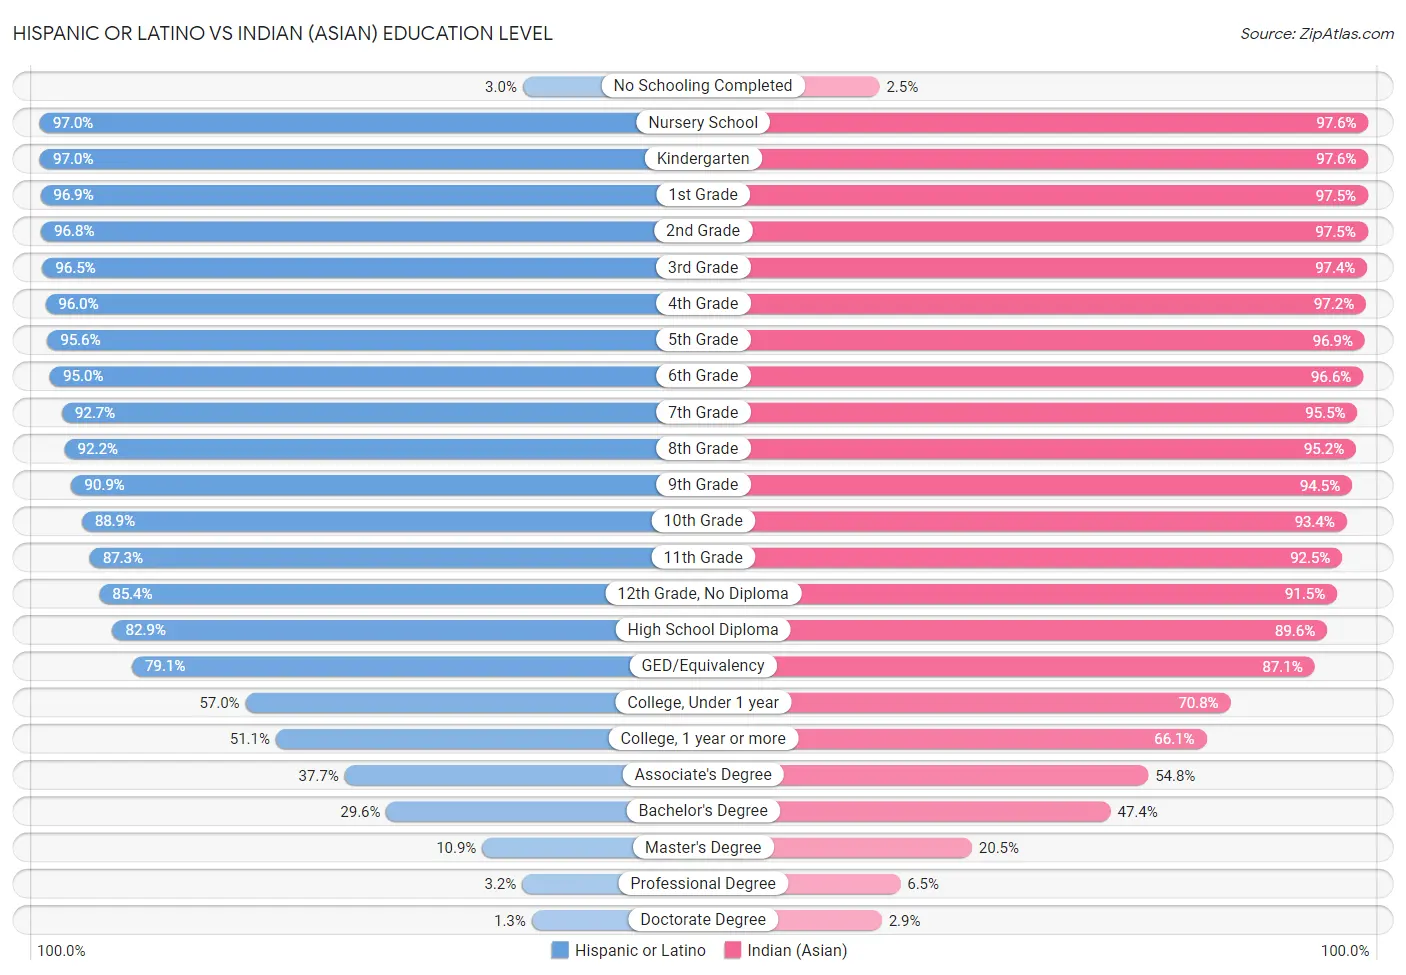 Hispanic or Latino vs Indian (Asian) Education Level